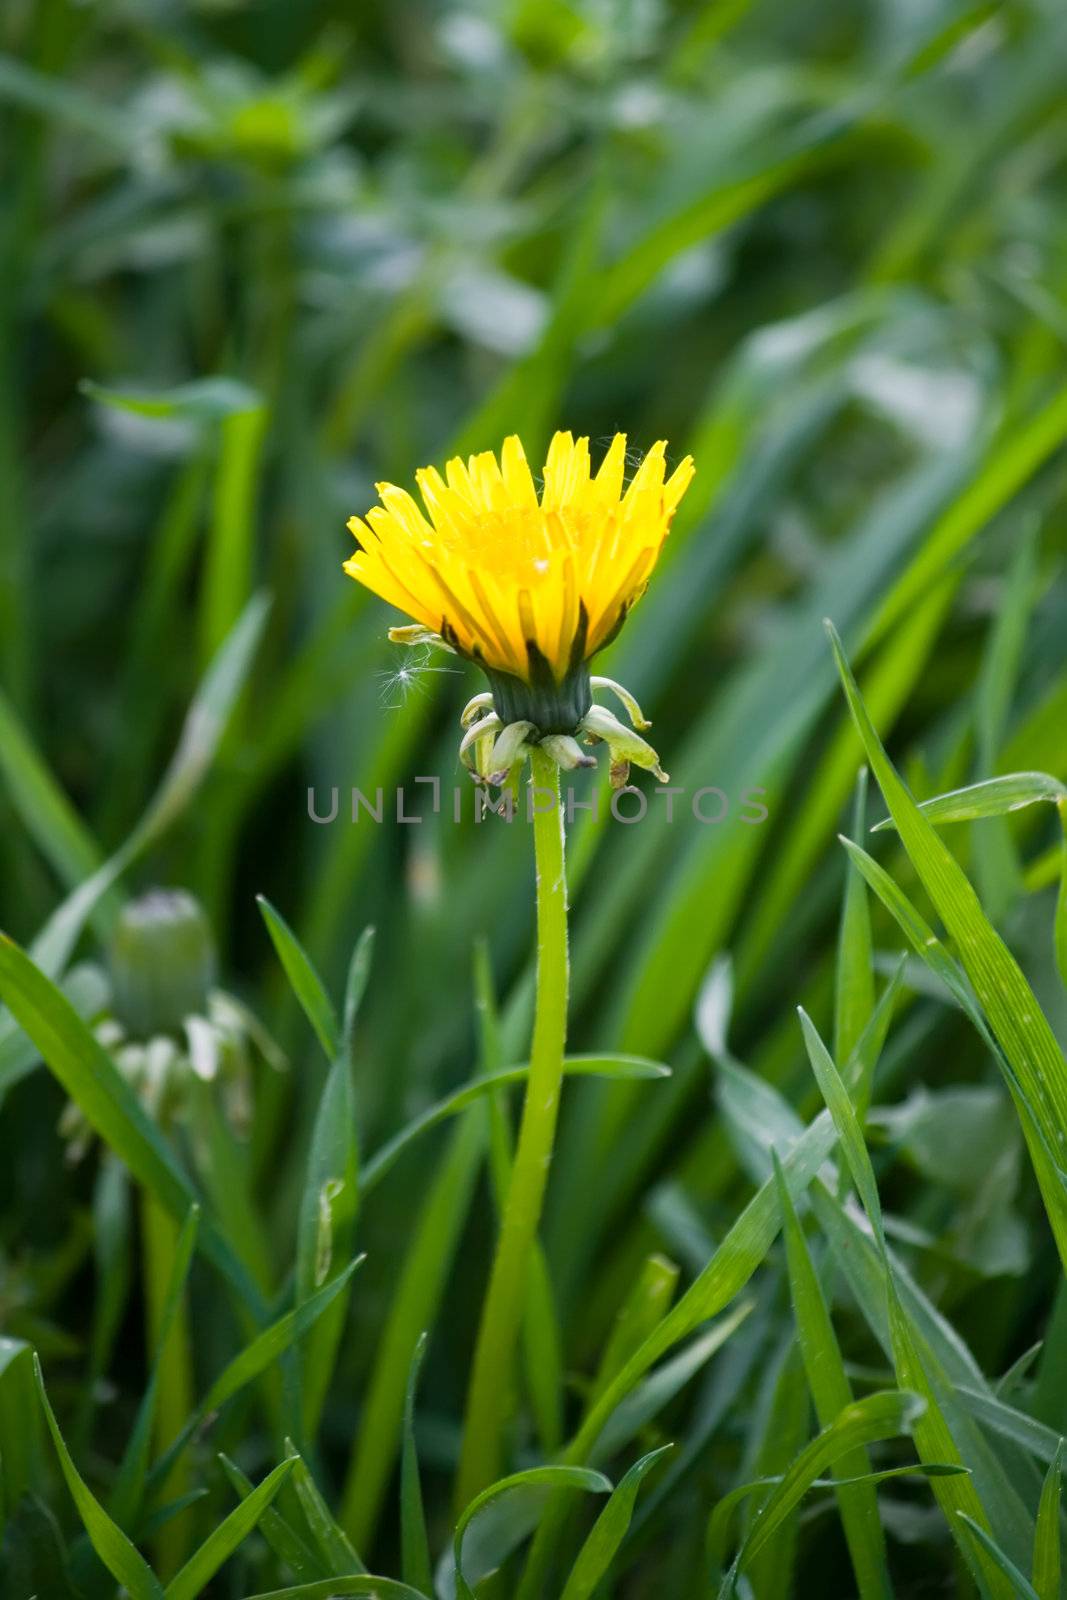 yellow dandelion flower in green grass